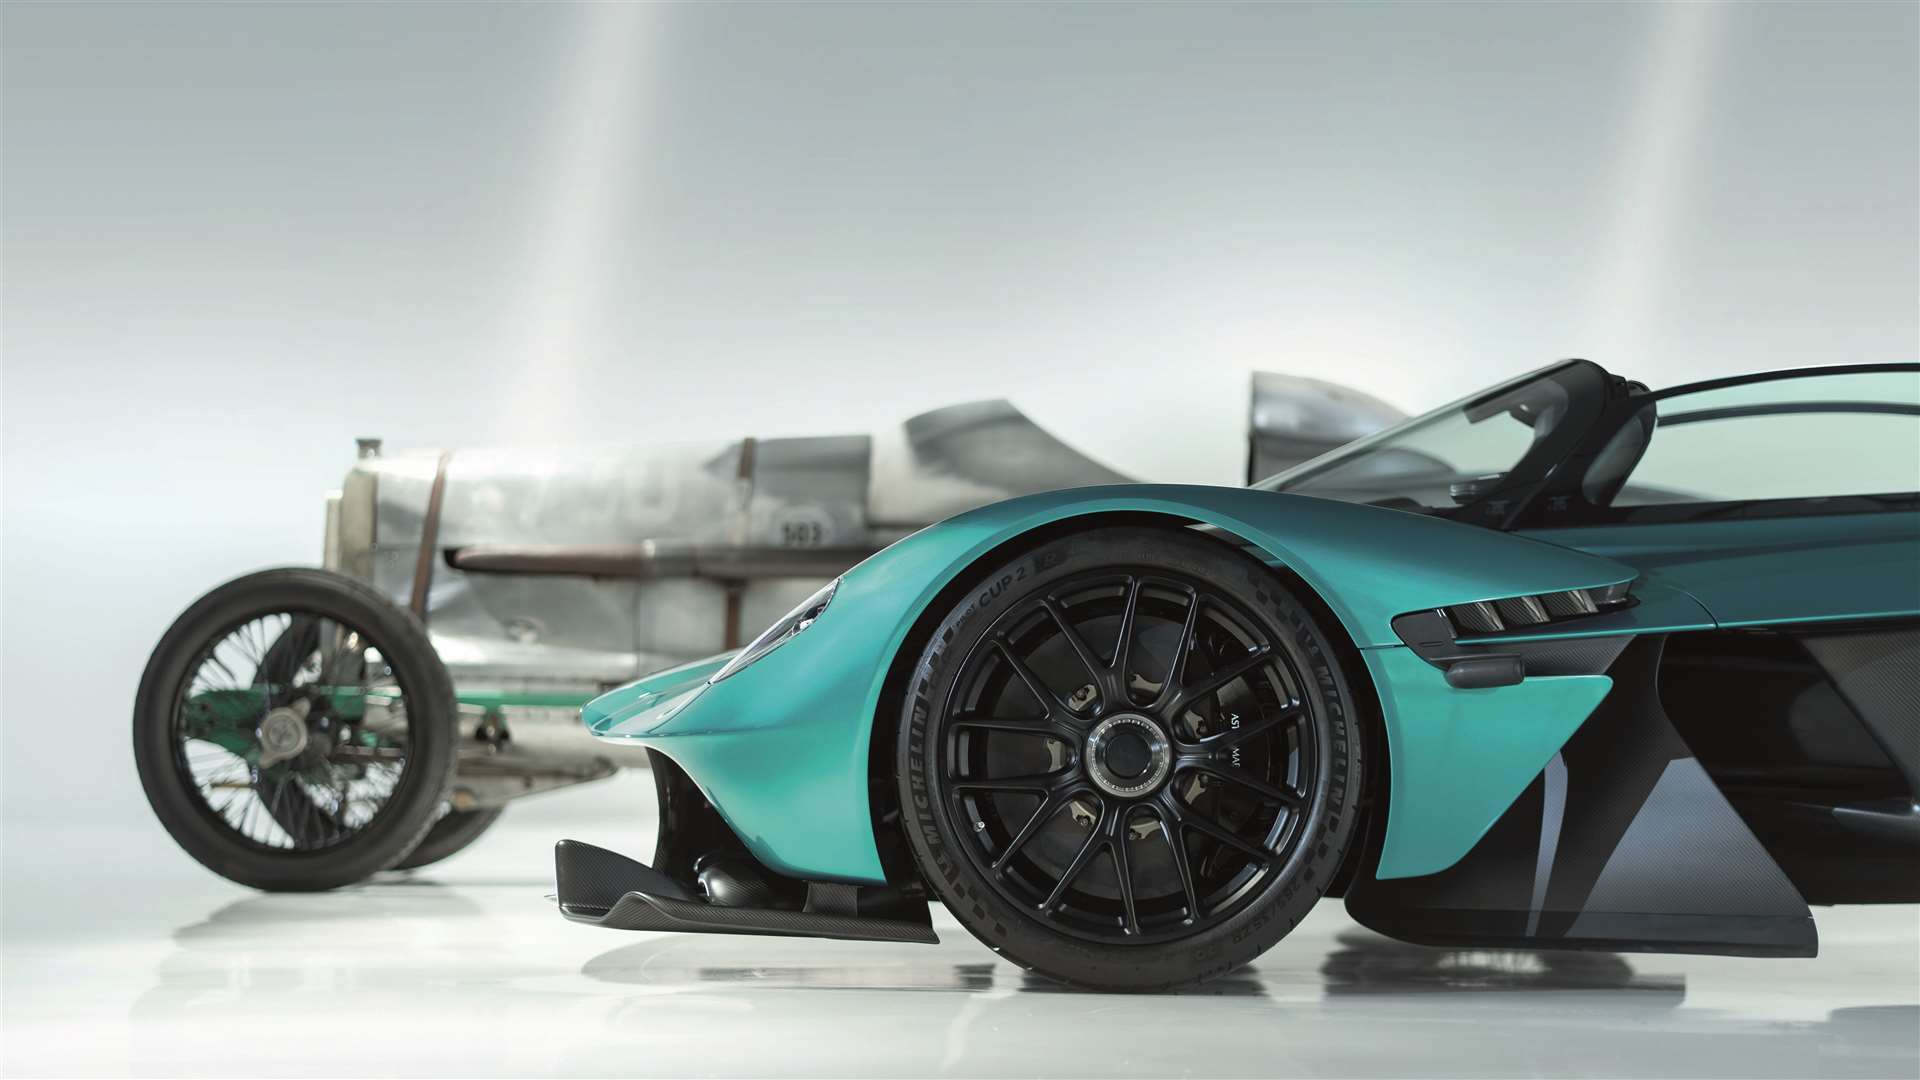 Aston Martin described the cars as ‘iconic and innovative’ (Aston Martin/PA)